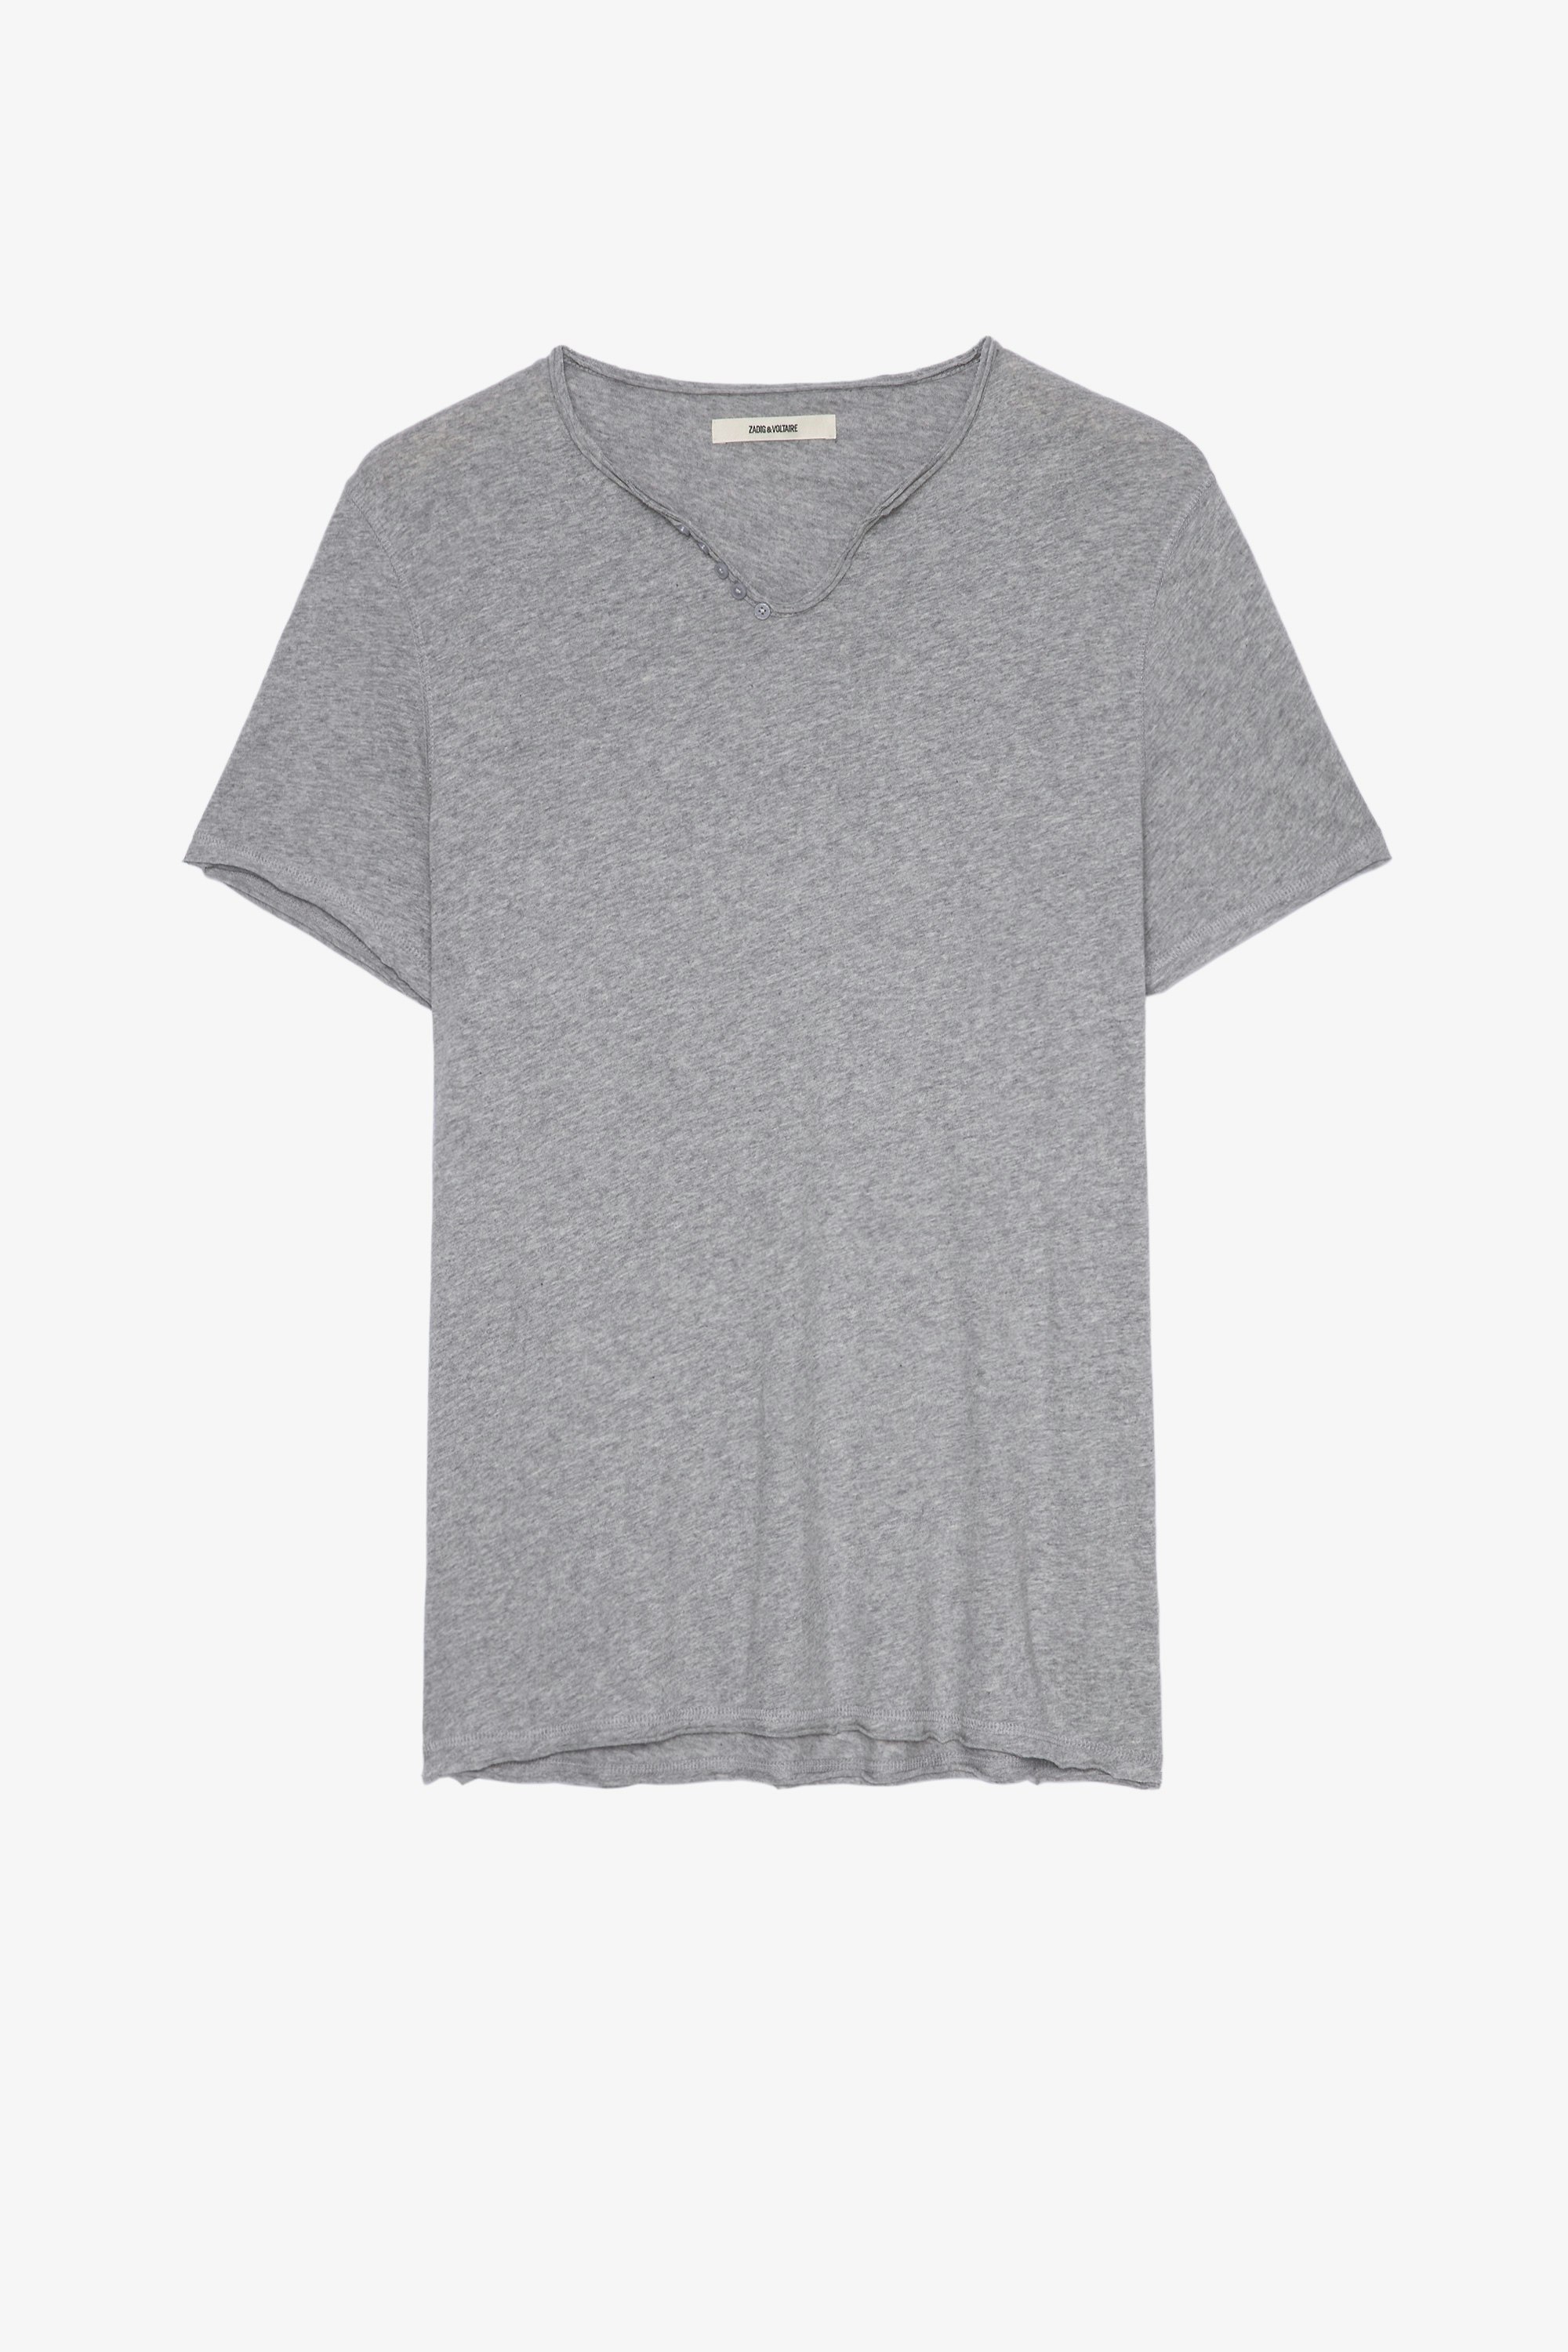 Monastir T-shirt Men’s flecked grey Henley T-shirt